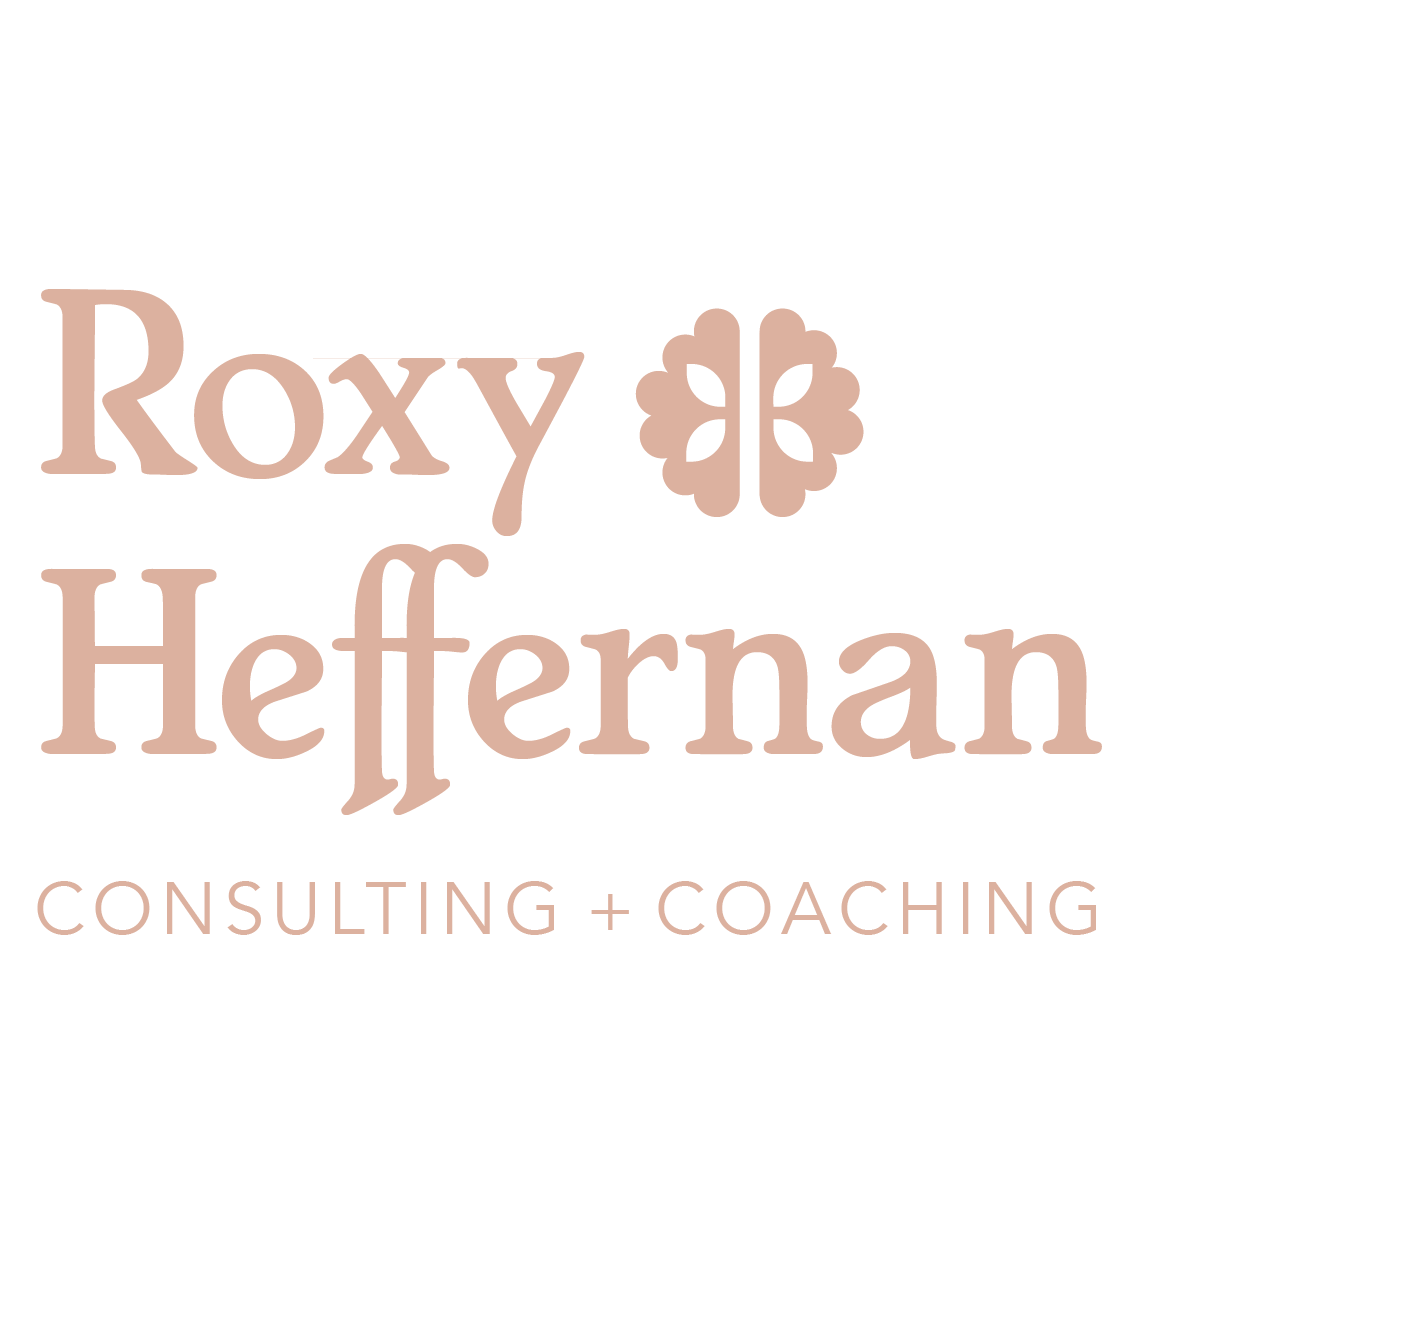 Roxy Heffernan Consultant and Coach